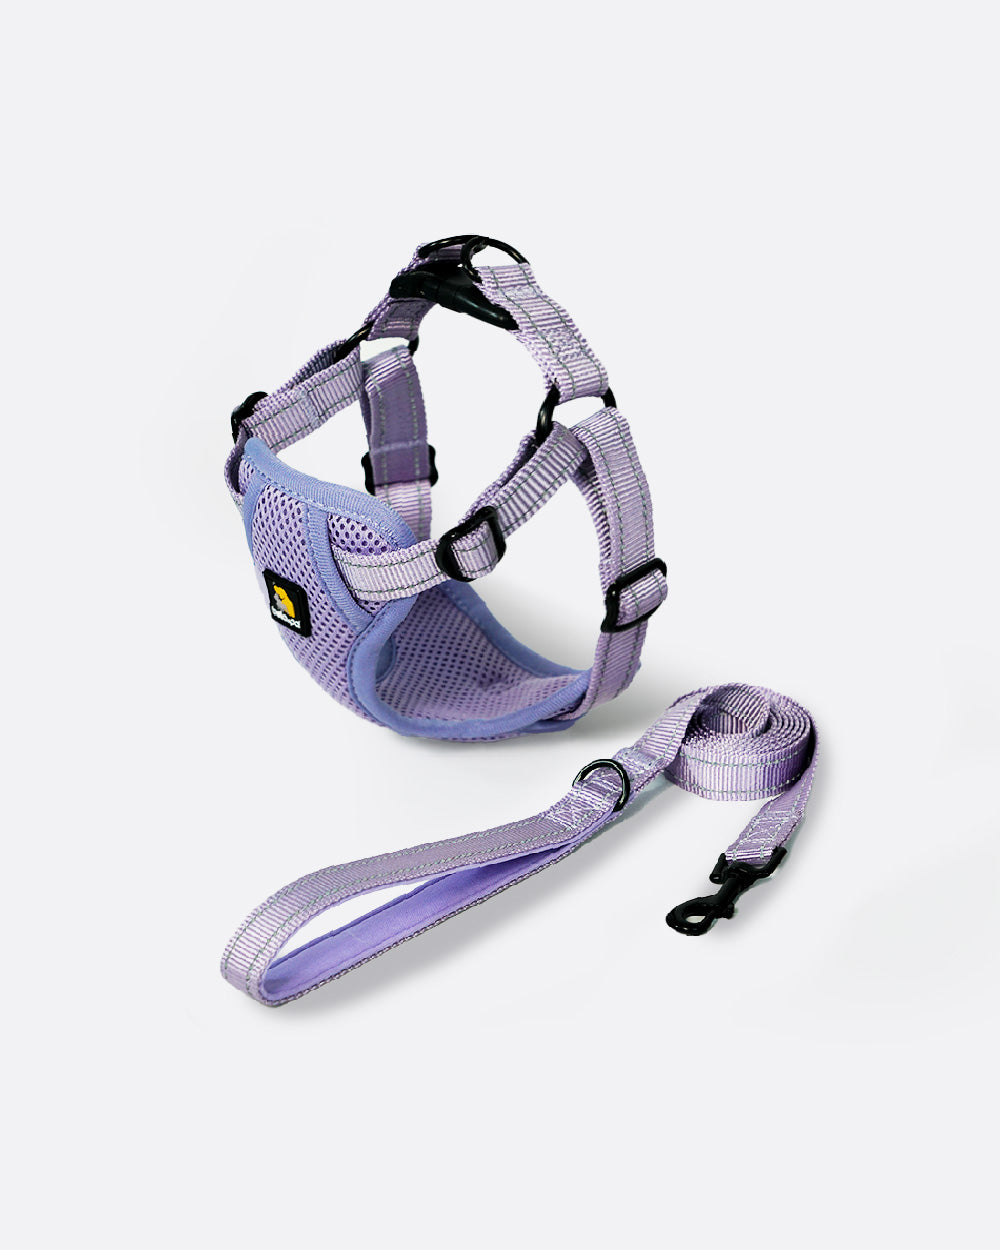 OxyMesh Flexi 踏入式狗胸背帶連牽繩套裝 - 薰衣草紫